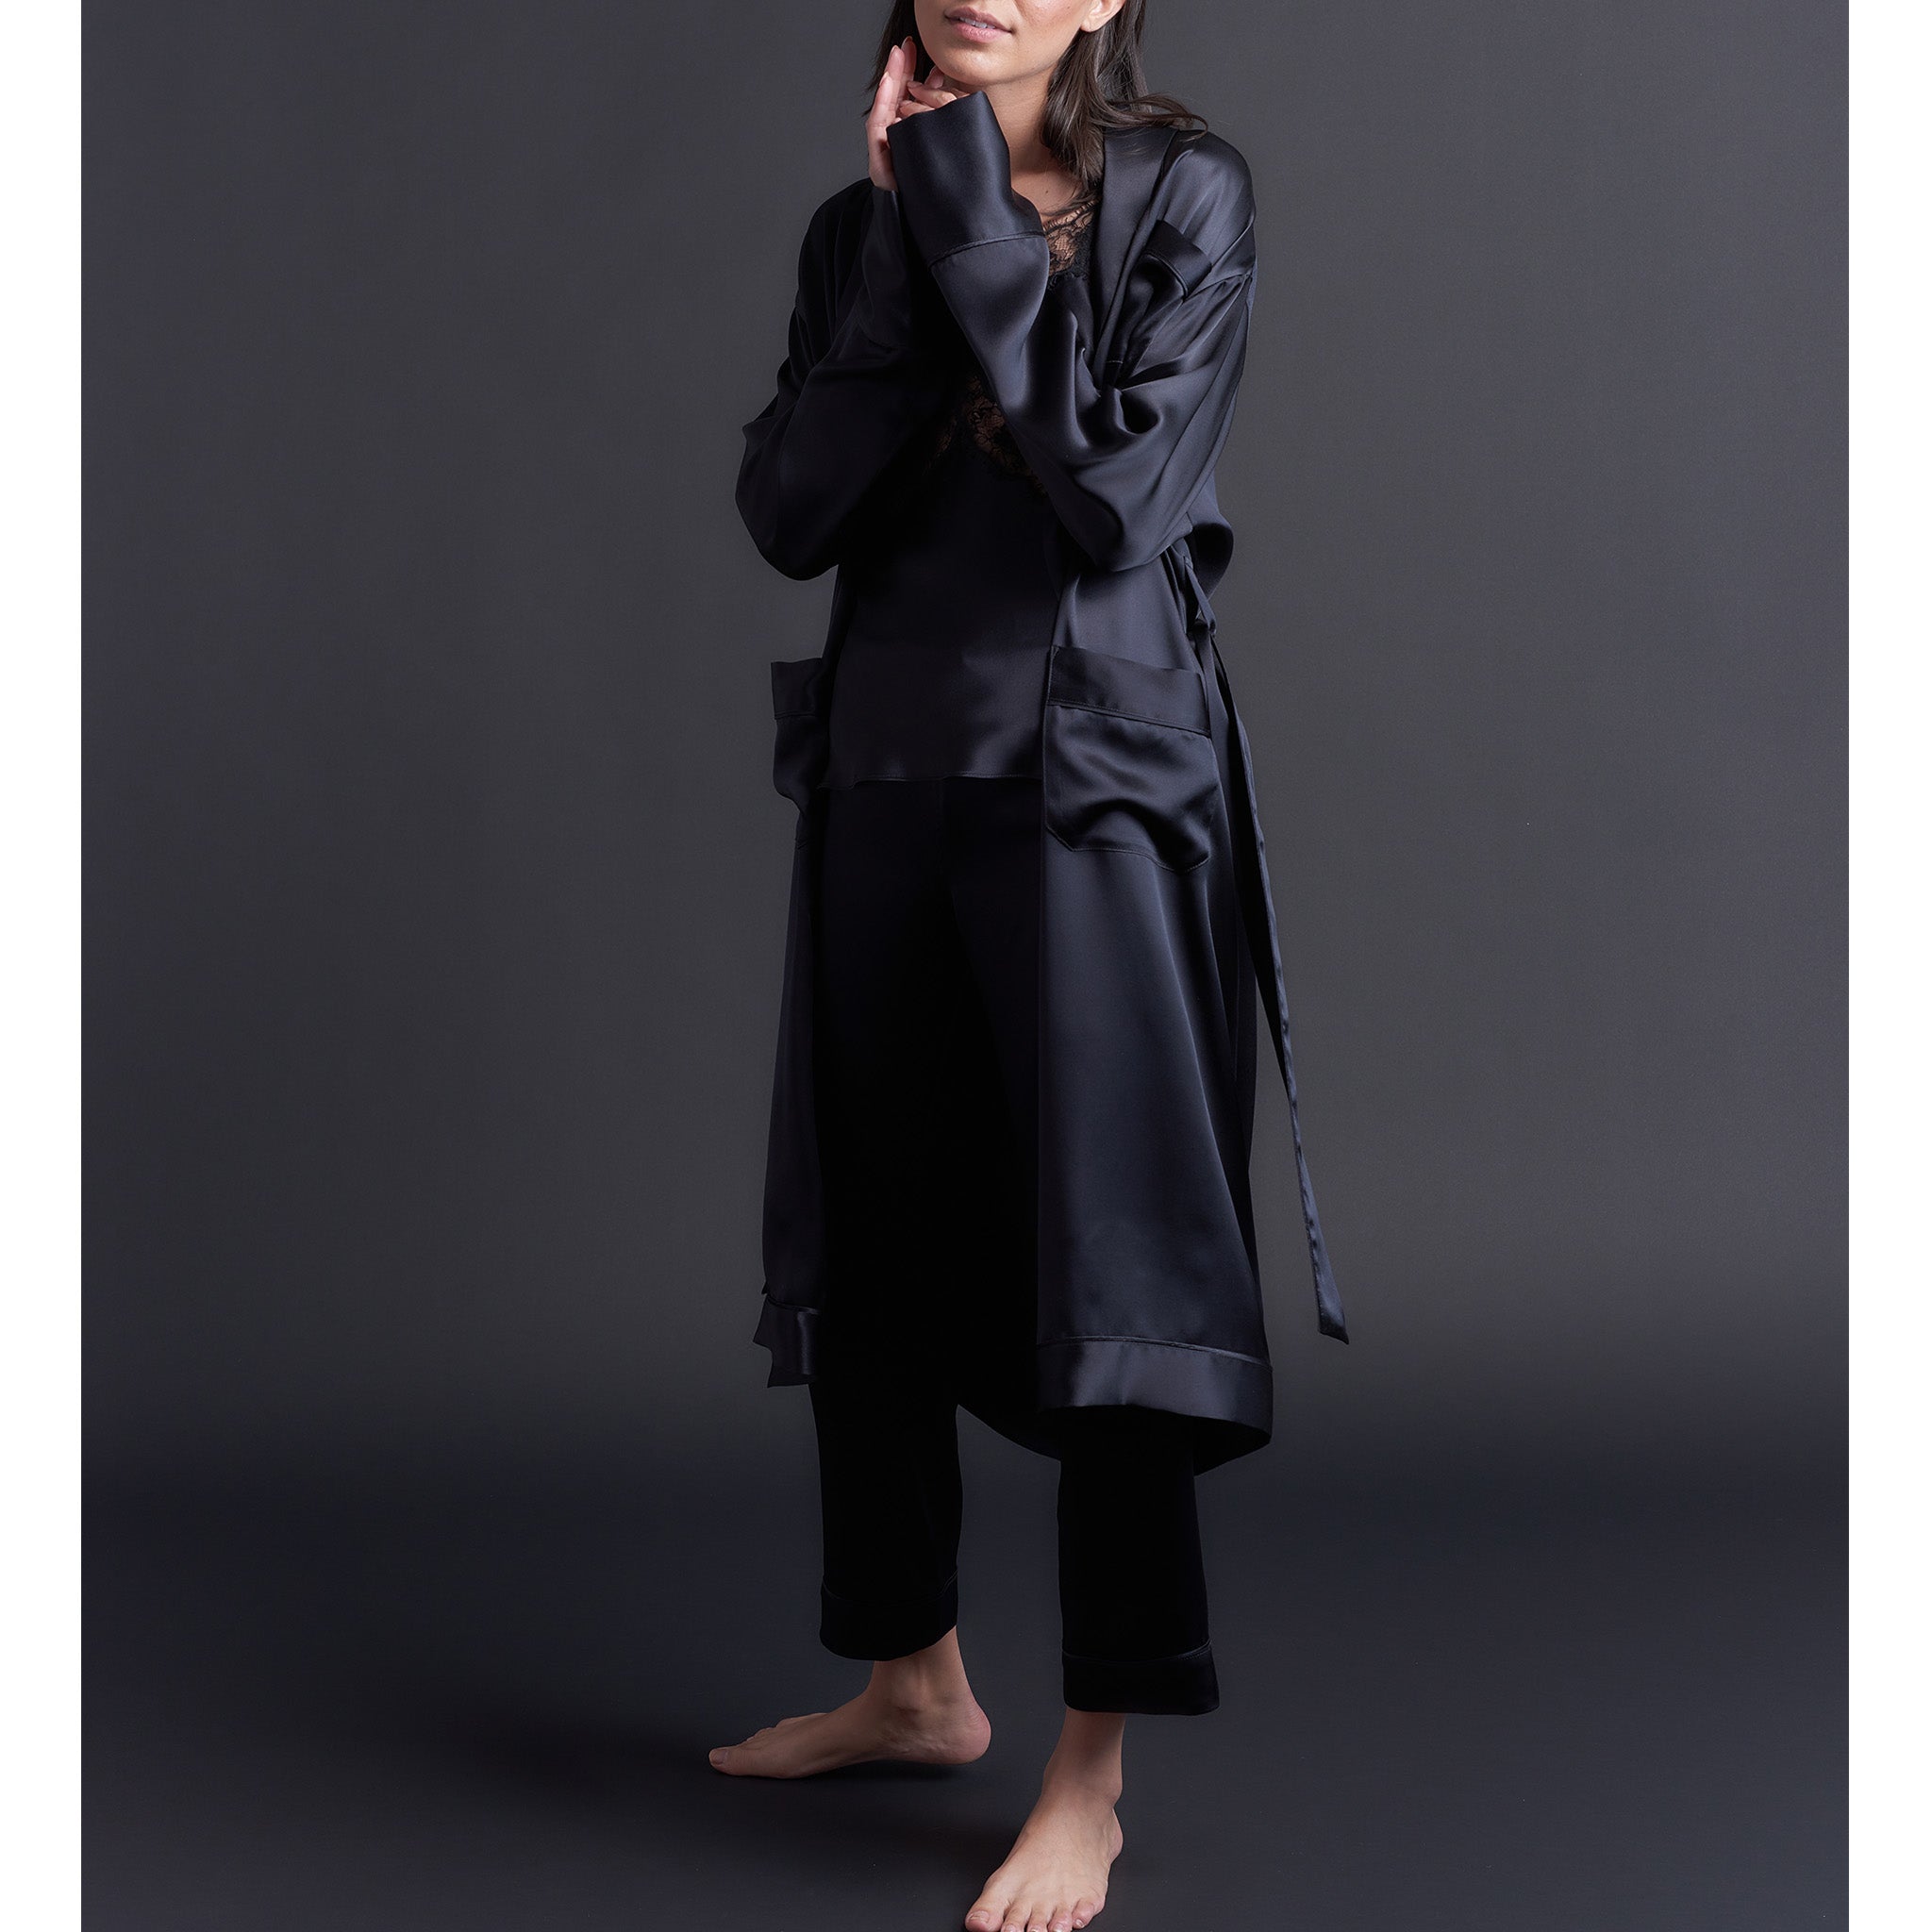 Claudette Robe in Black Silk Charmeuse